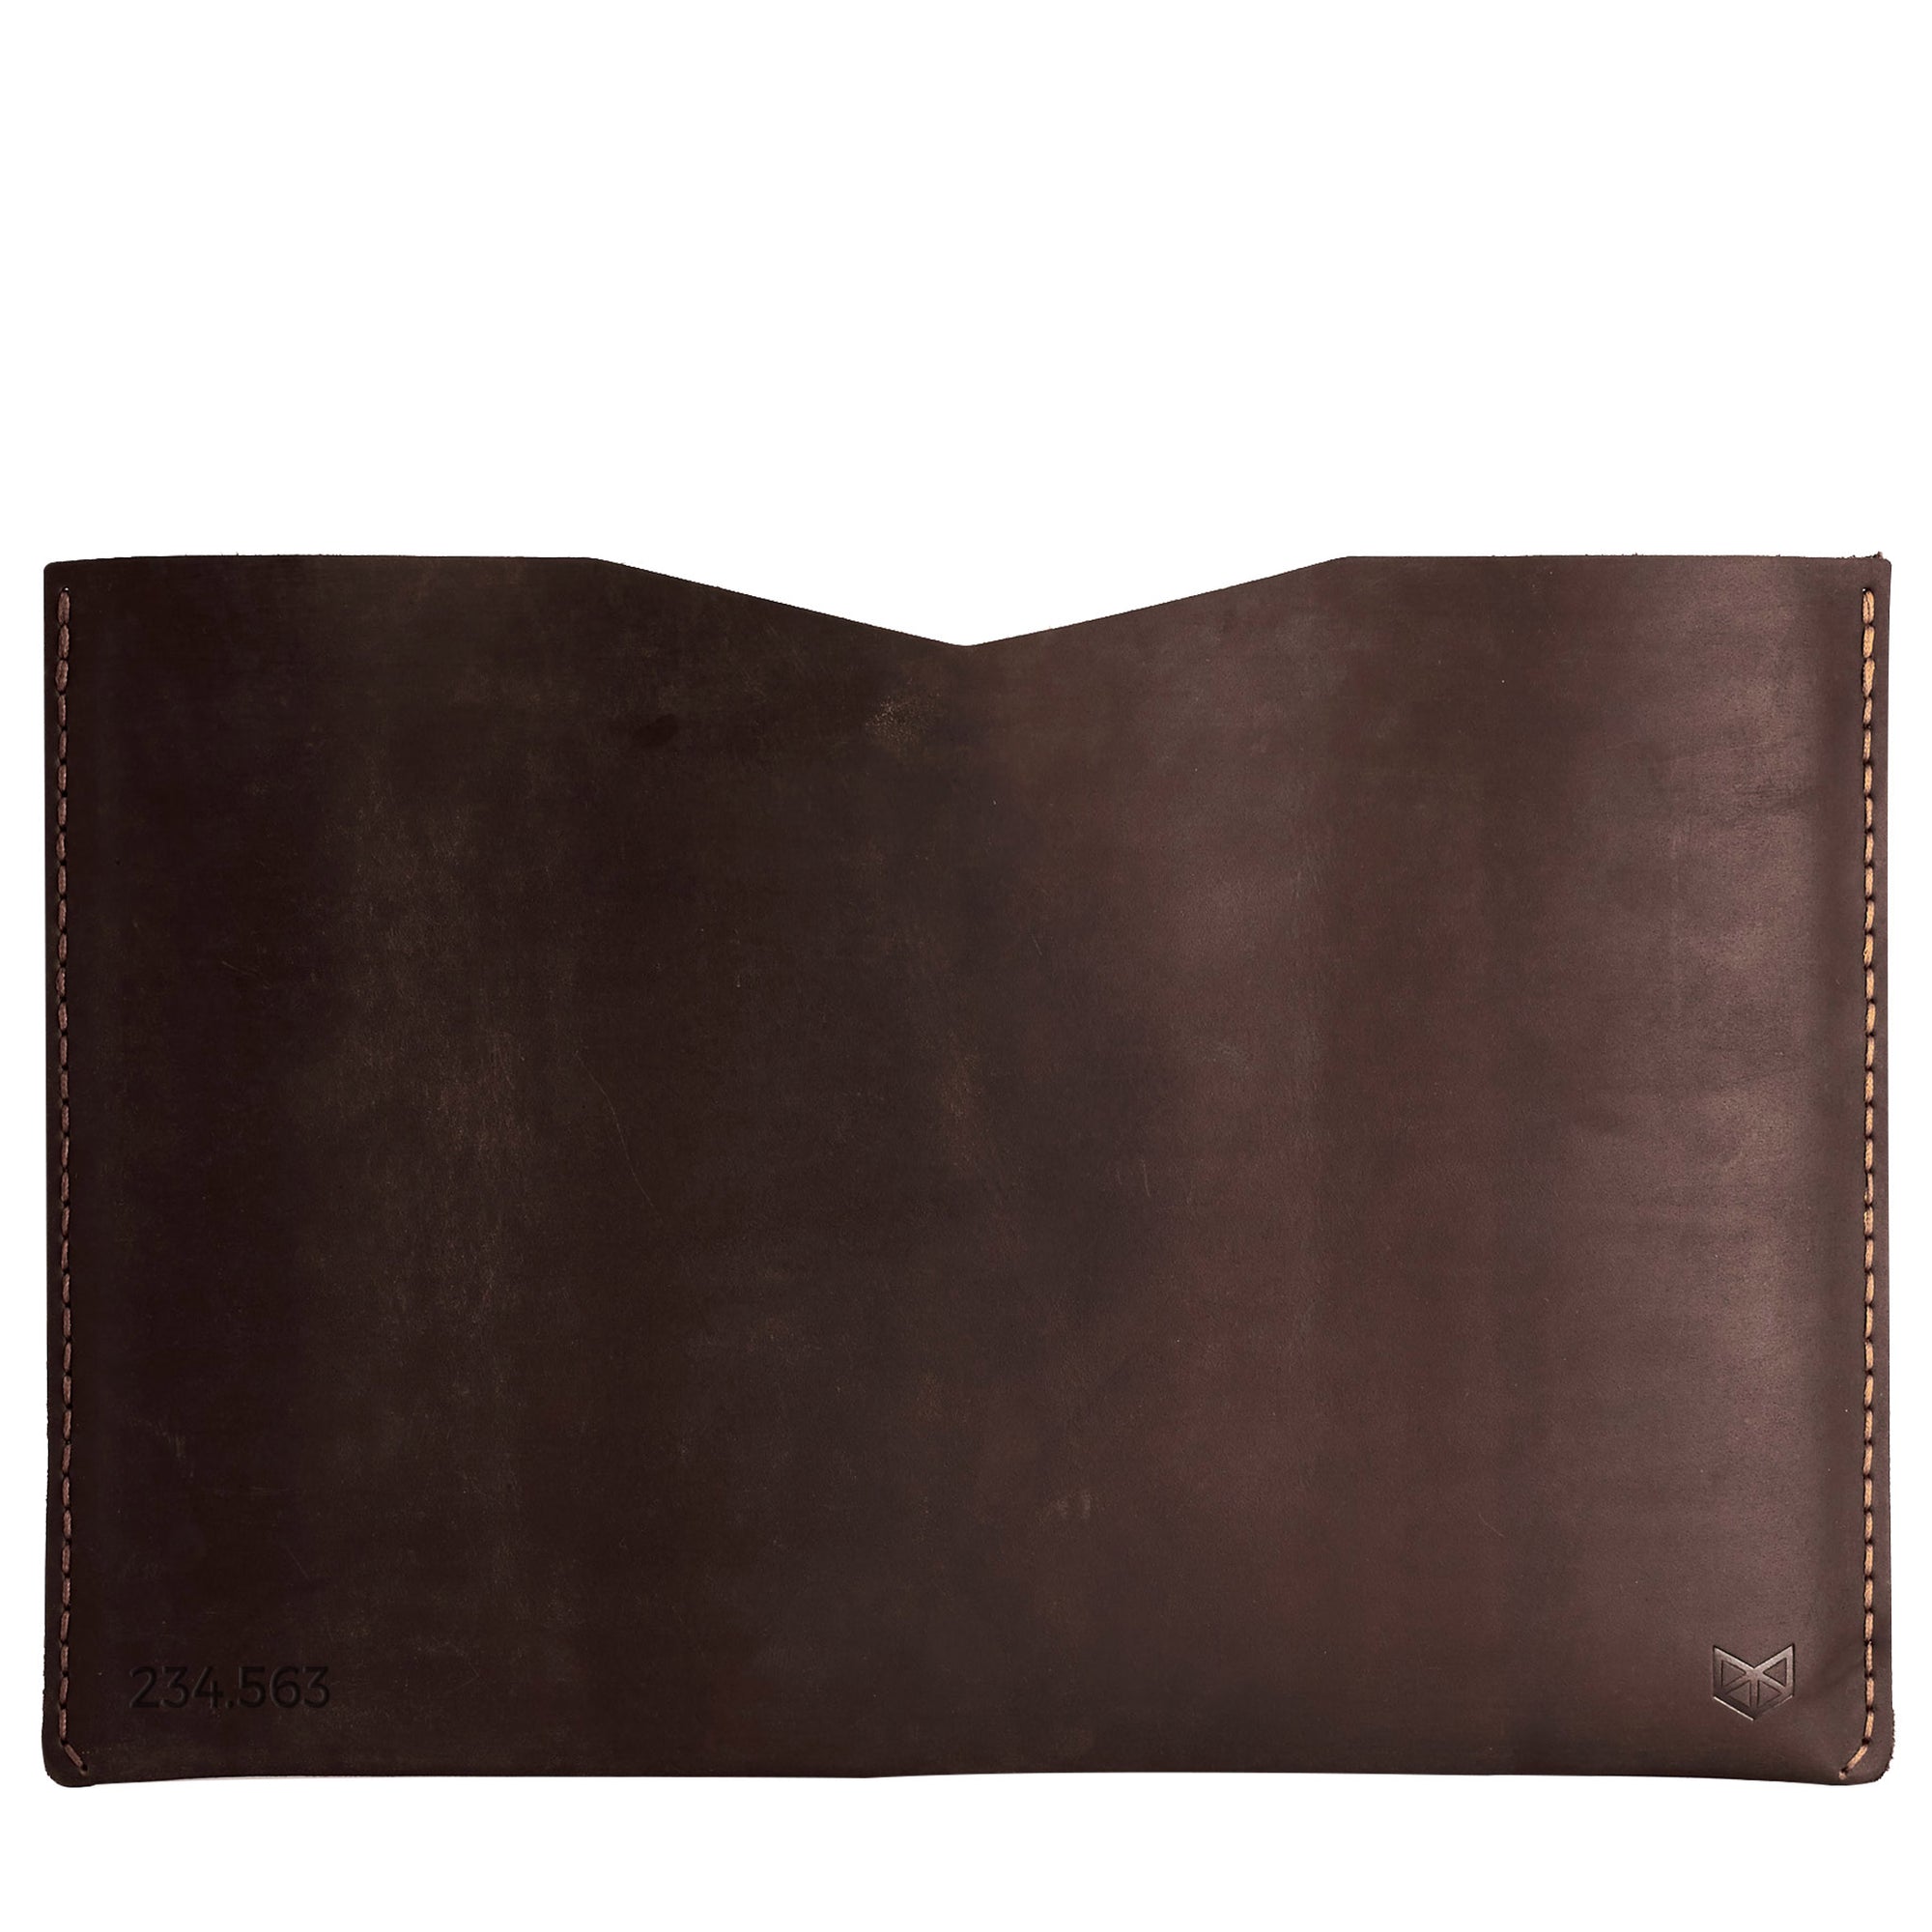 BASIC // MARRON: Leather Microsoft Surface Sleeve Case by Capra Leather